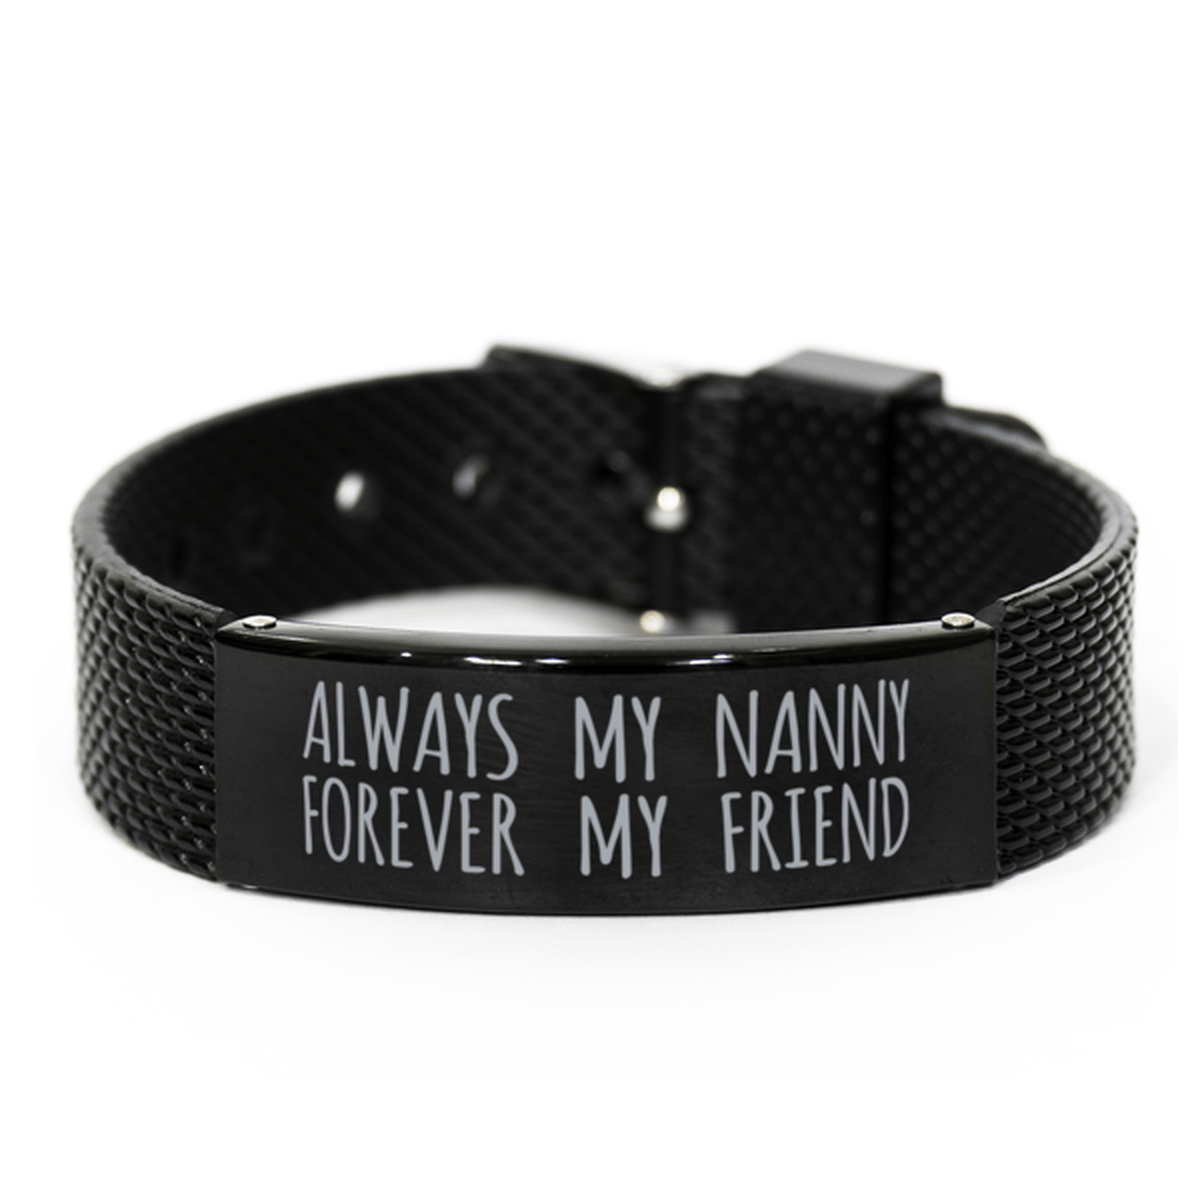 Inspirational Nanny Black Shark Mesh Bracelet, Always My Nanny Forever My Friend, Best Birthday Gifts for Family Friends